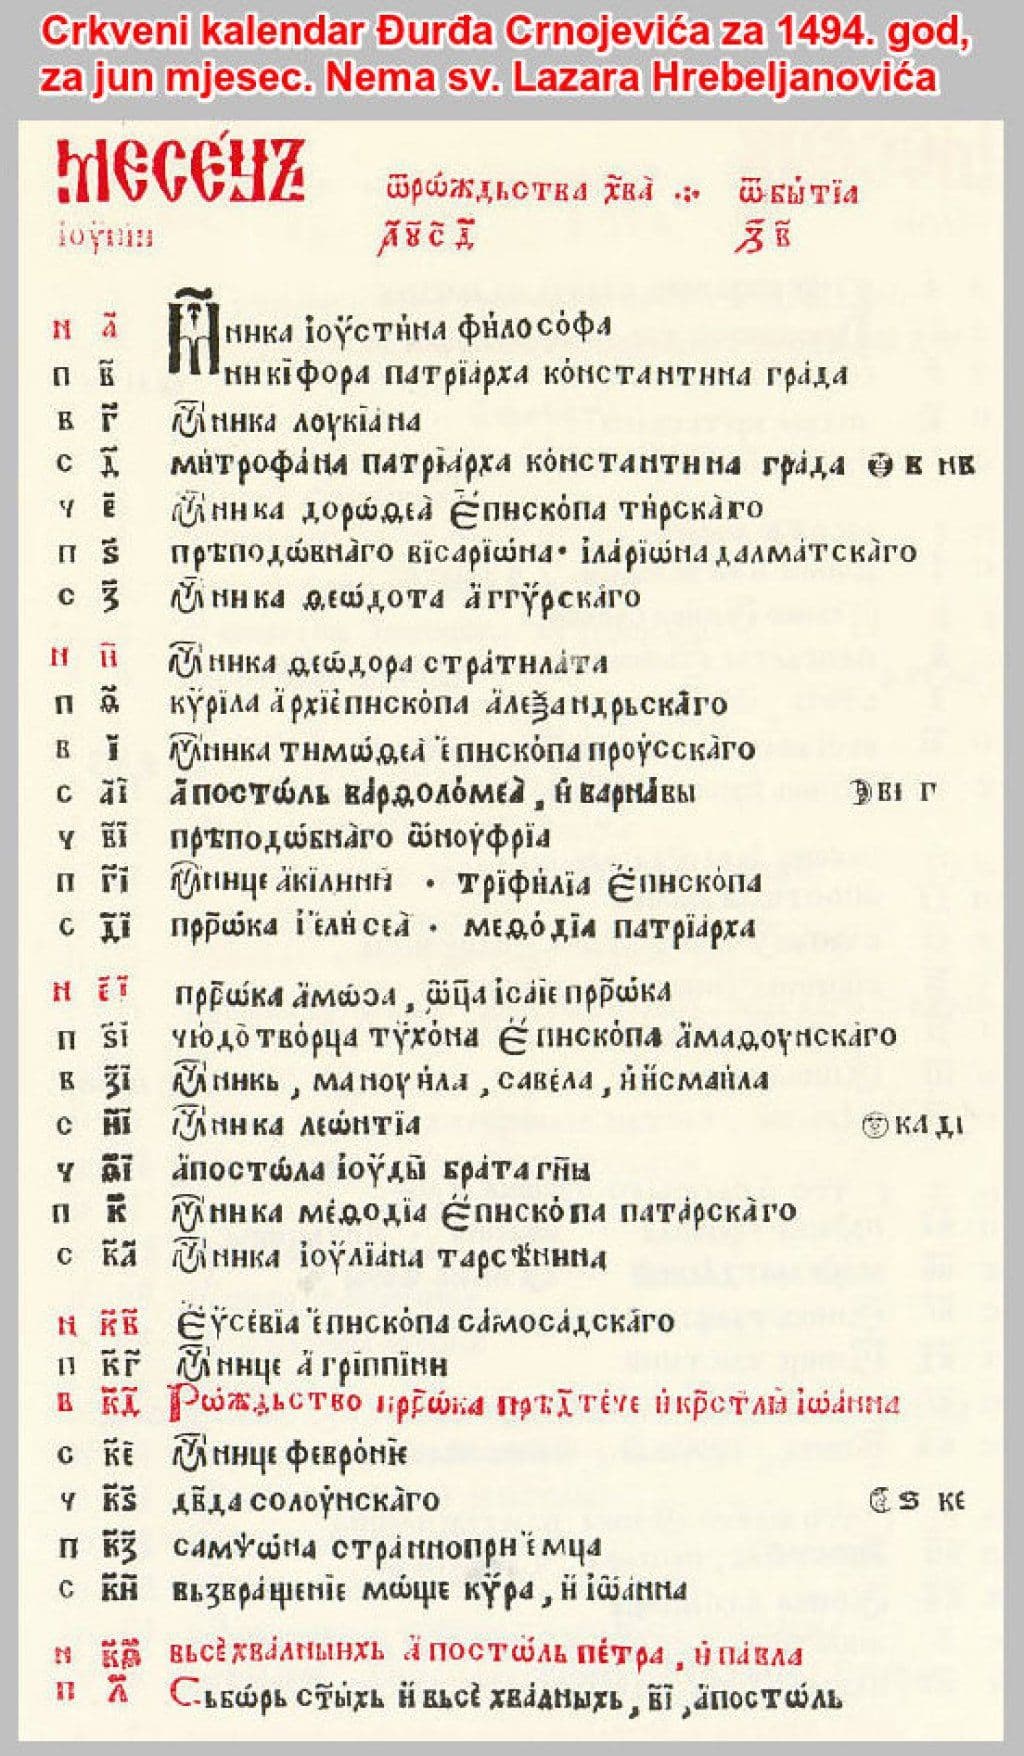 2-jun-1494-kalendar-crnojevica